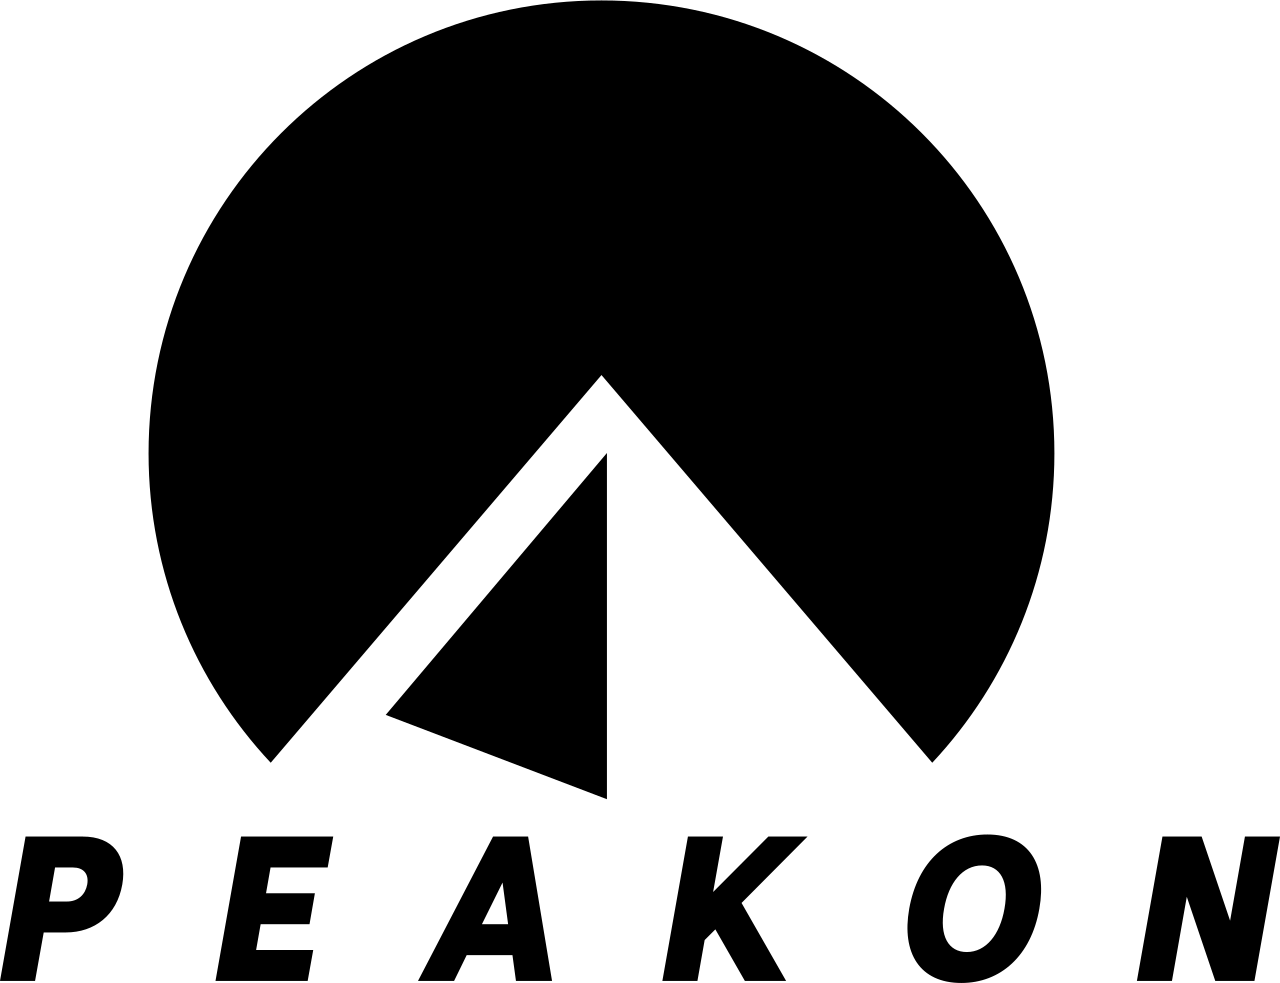 peakon's logo